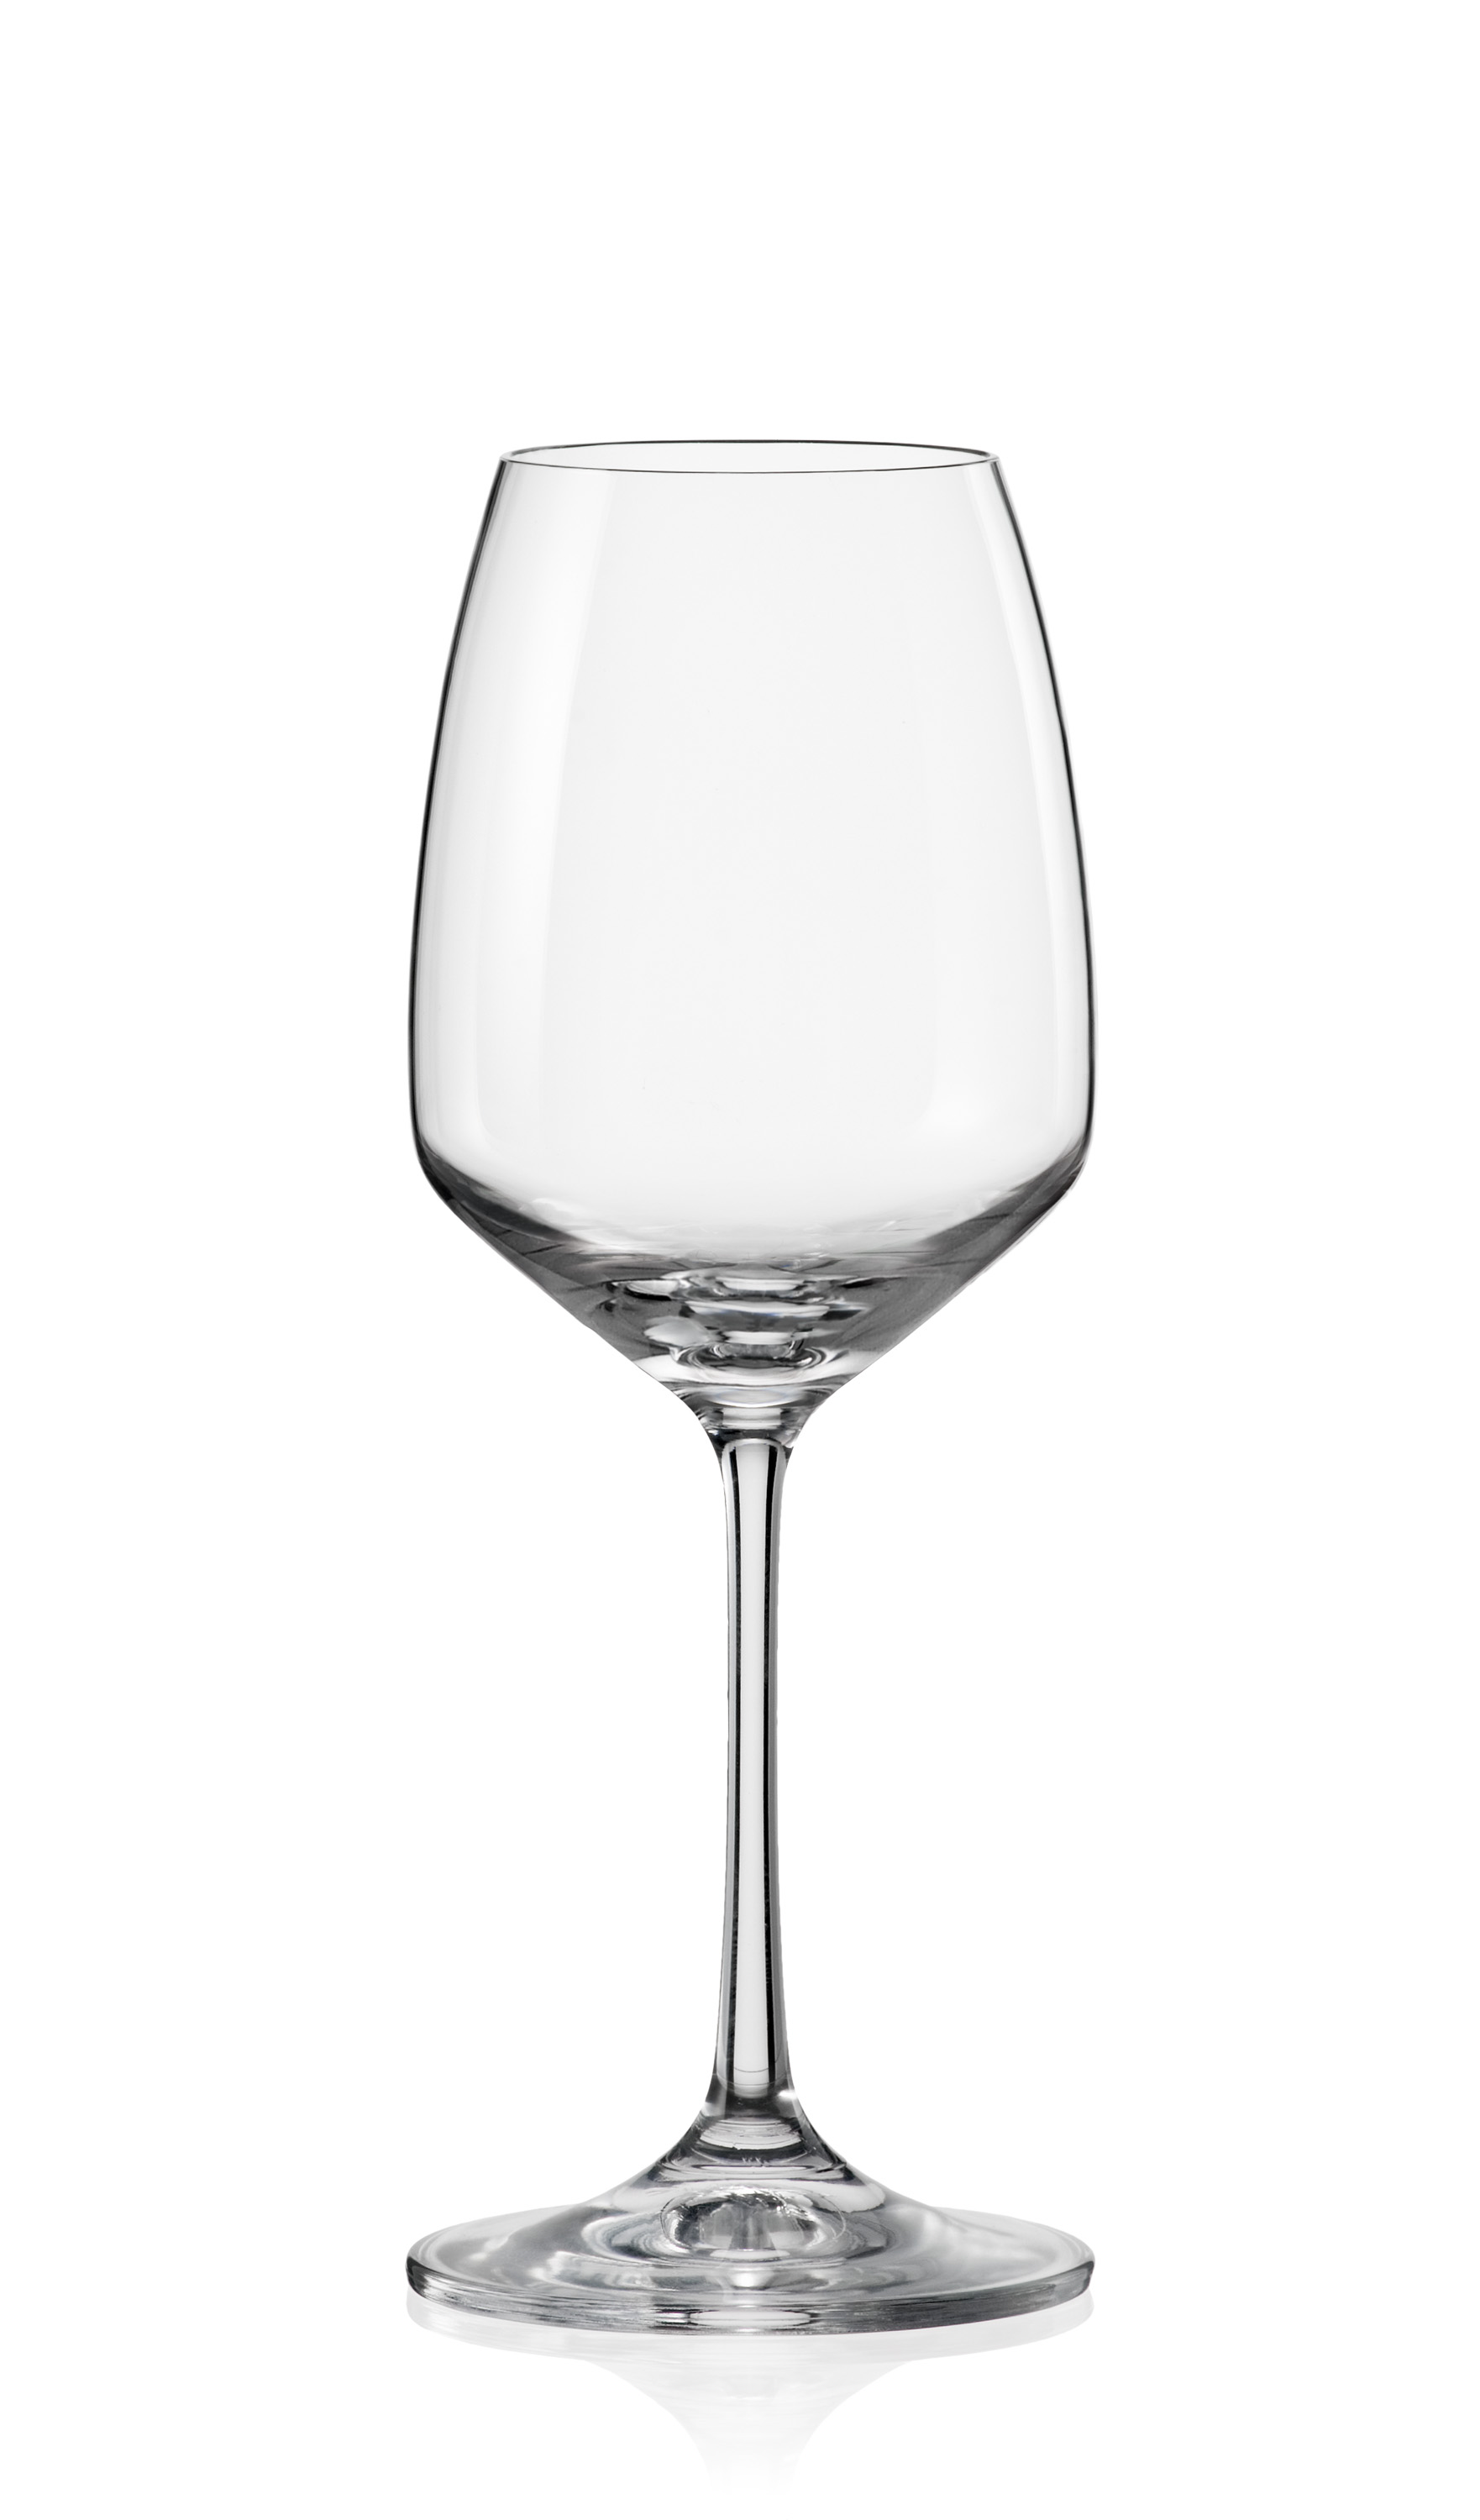 GISELLE - Set 6 pahare vin sticla cristalina 340 ml